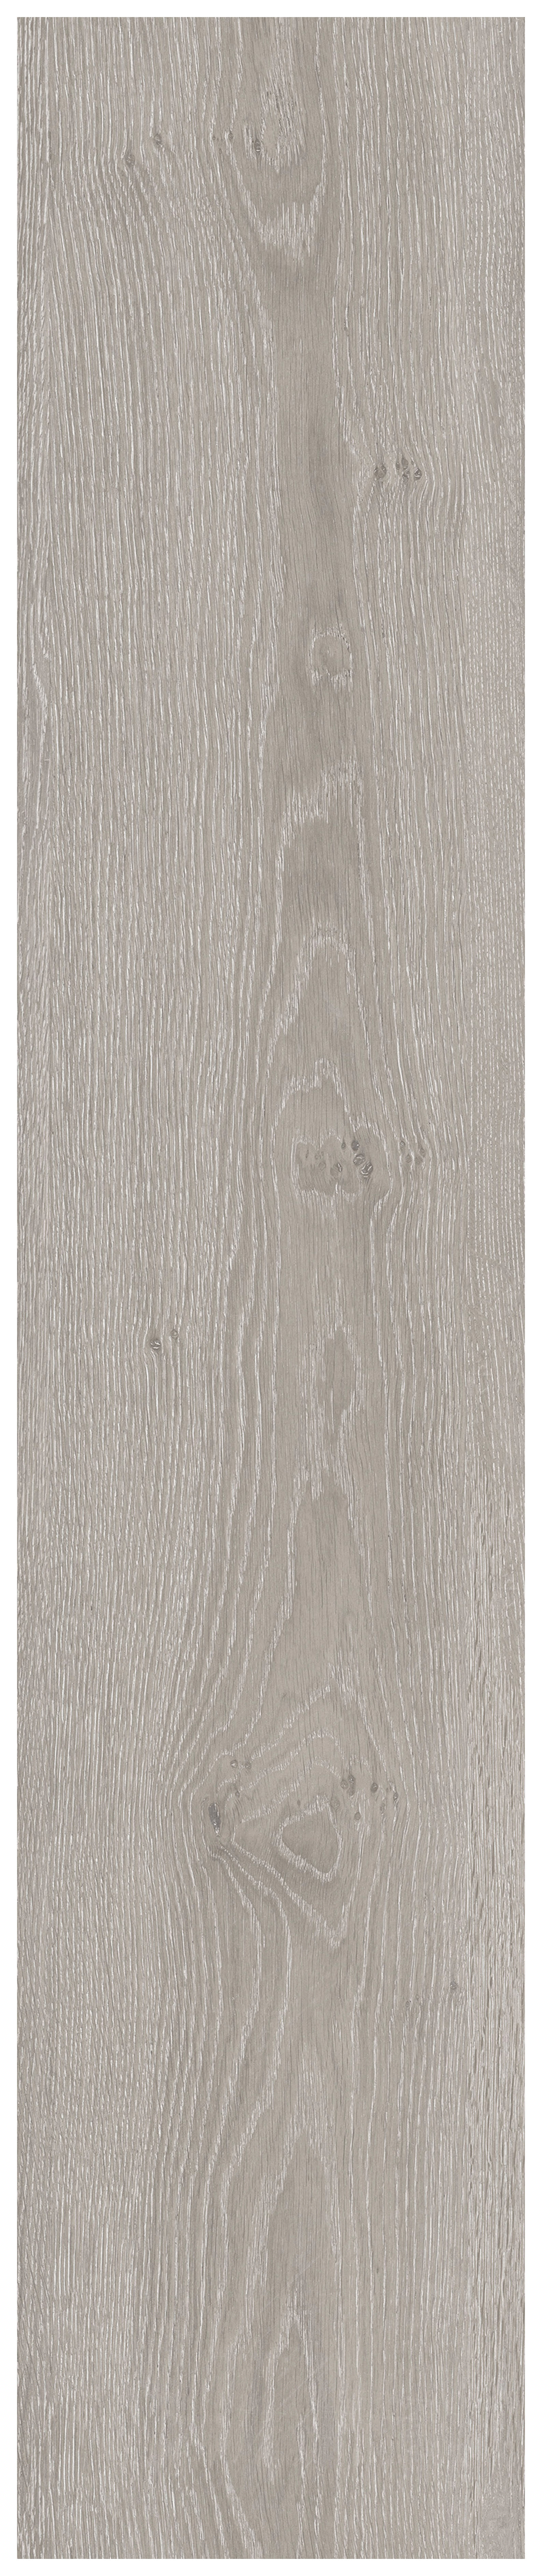 Ludlow Limed Light Oak Herringbone Spc Flooring with